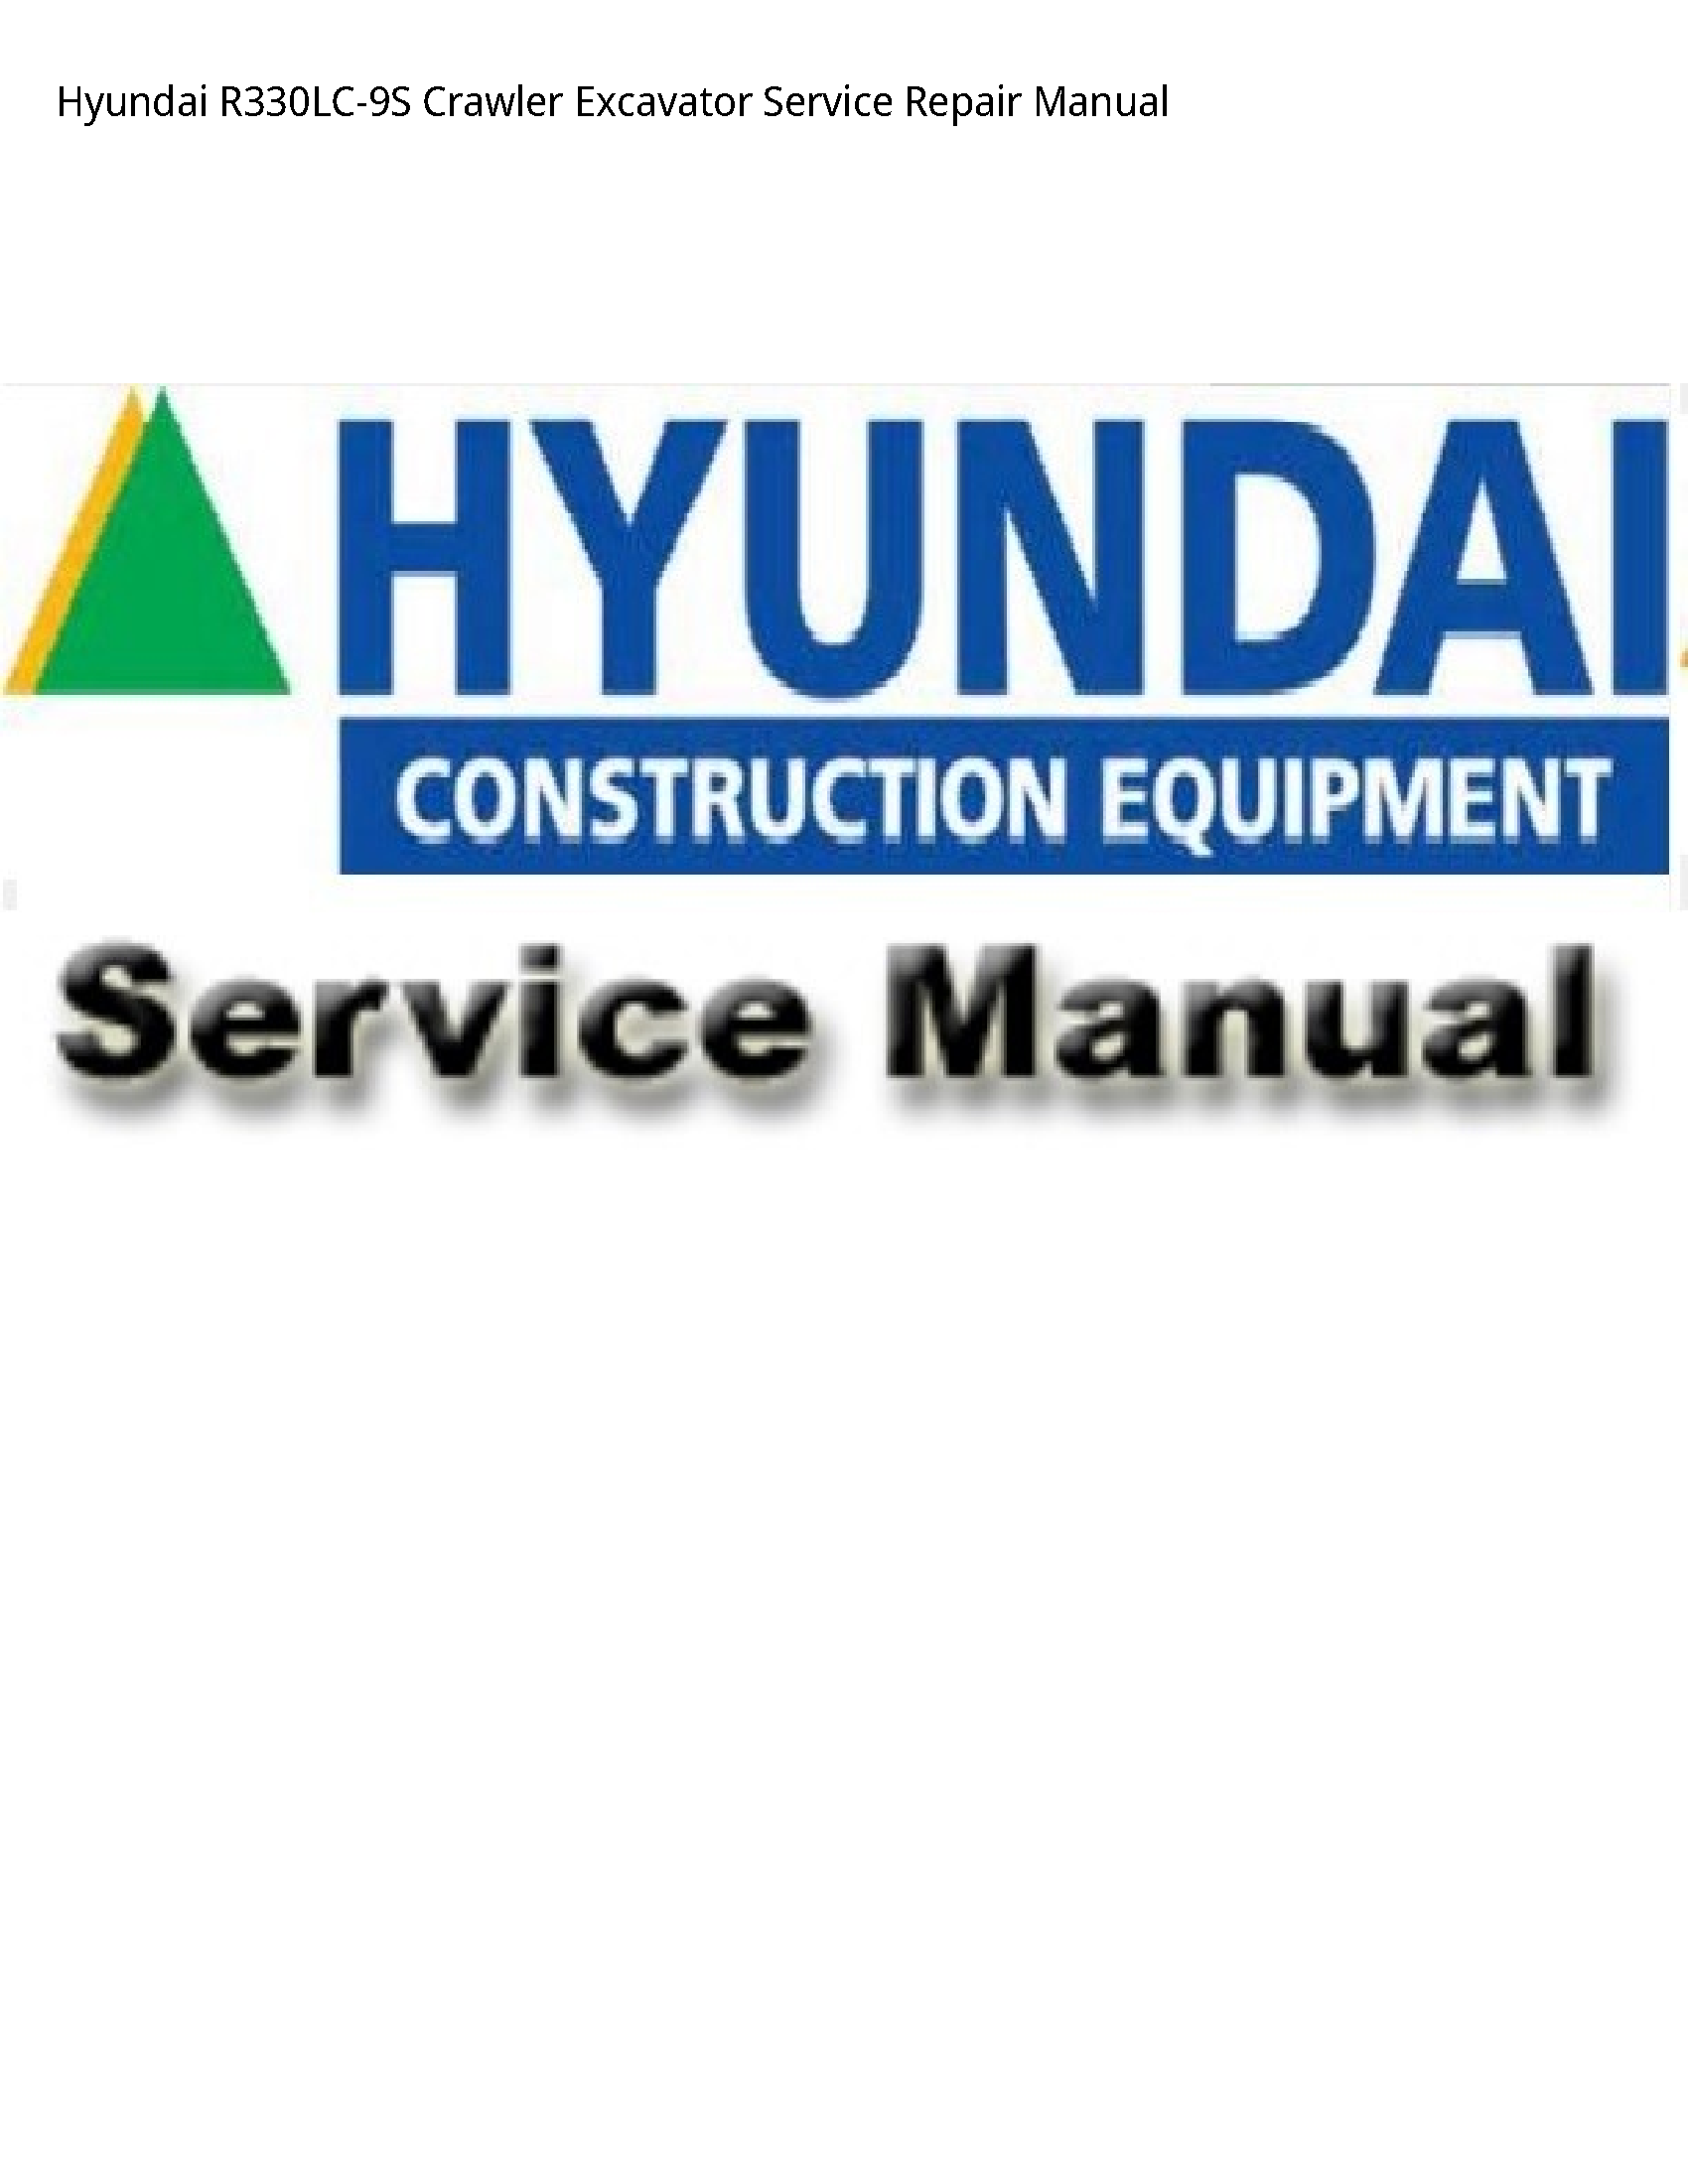 Hyundai R330LC-9S Crawler Excavator manual